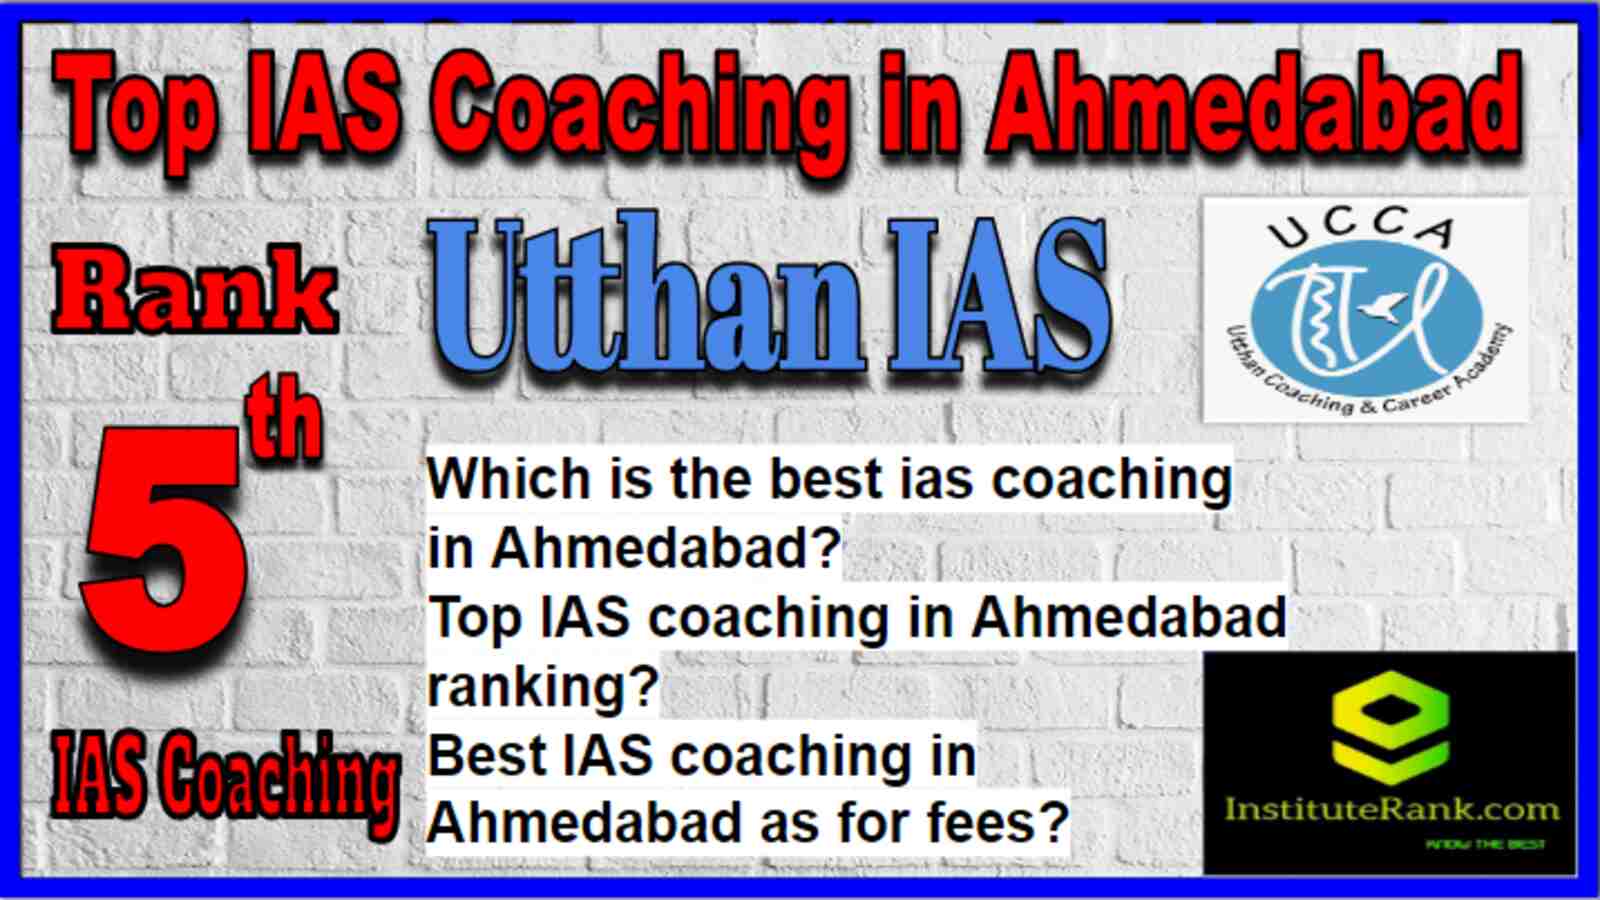 Rank 5 Top IAS Coaching in Ahmedabad